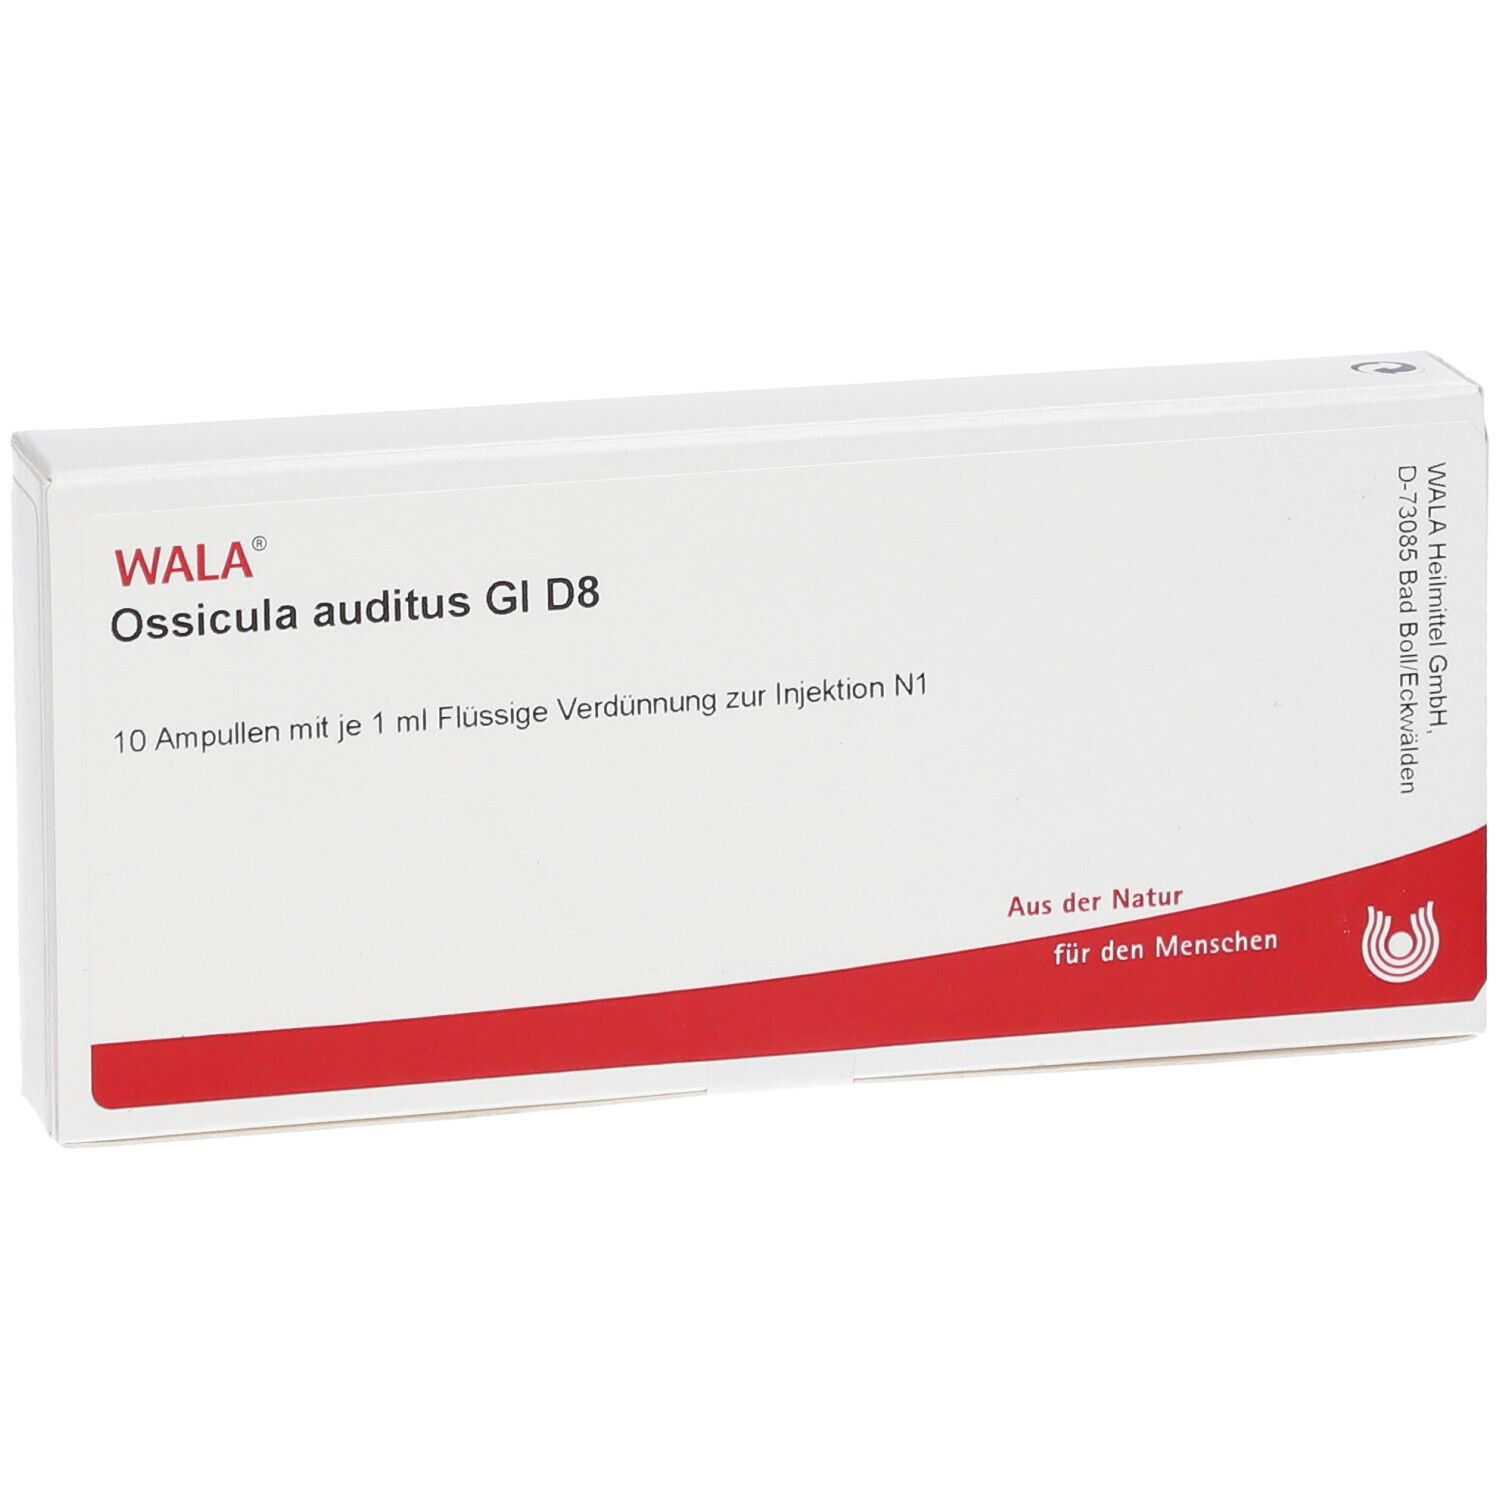 WALA® Ossicula auditus Gl D 8